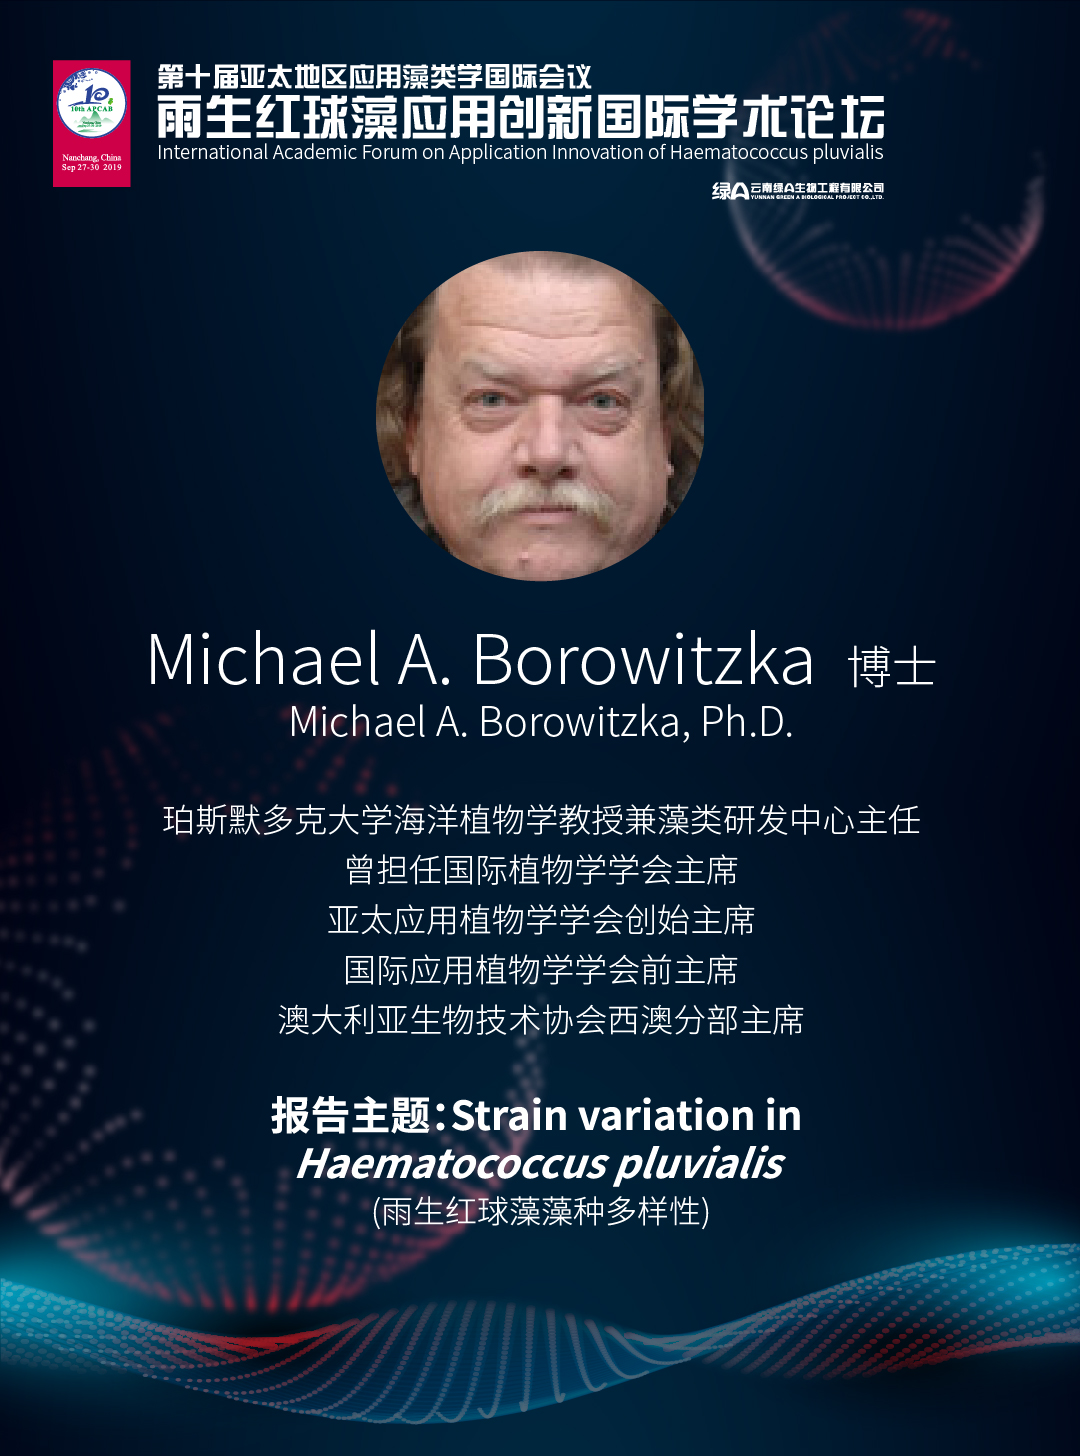 Michael A. Borowitzka 博士 澳大利亚珀斯默多克大学海洋藻类学教授和藻类研发中心主任